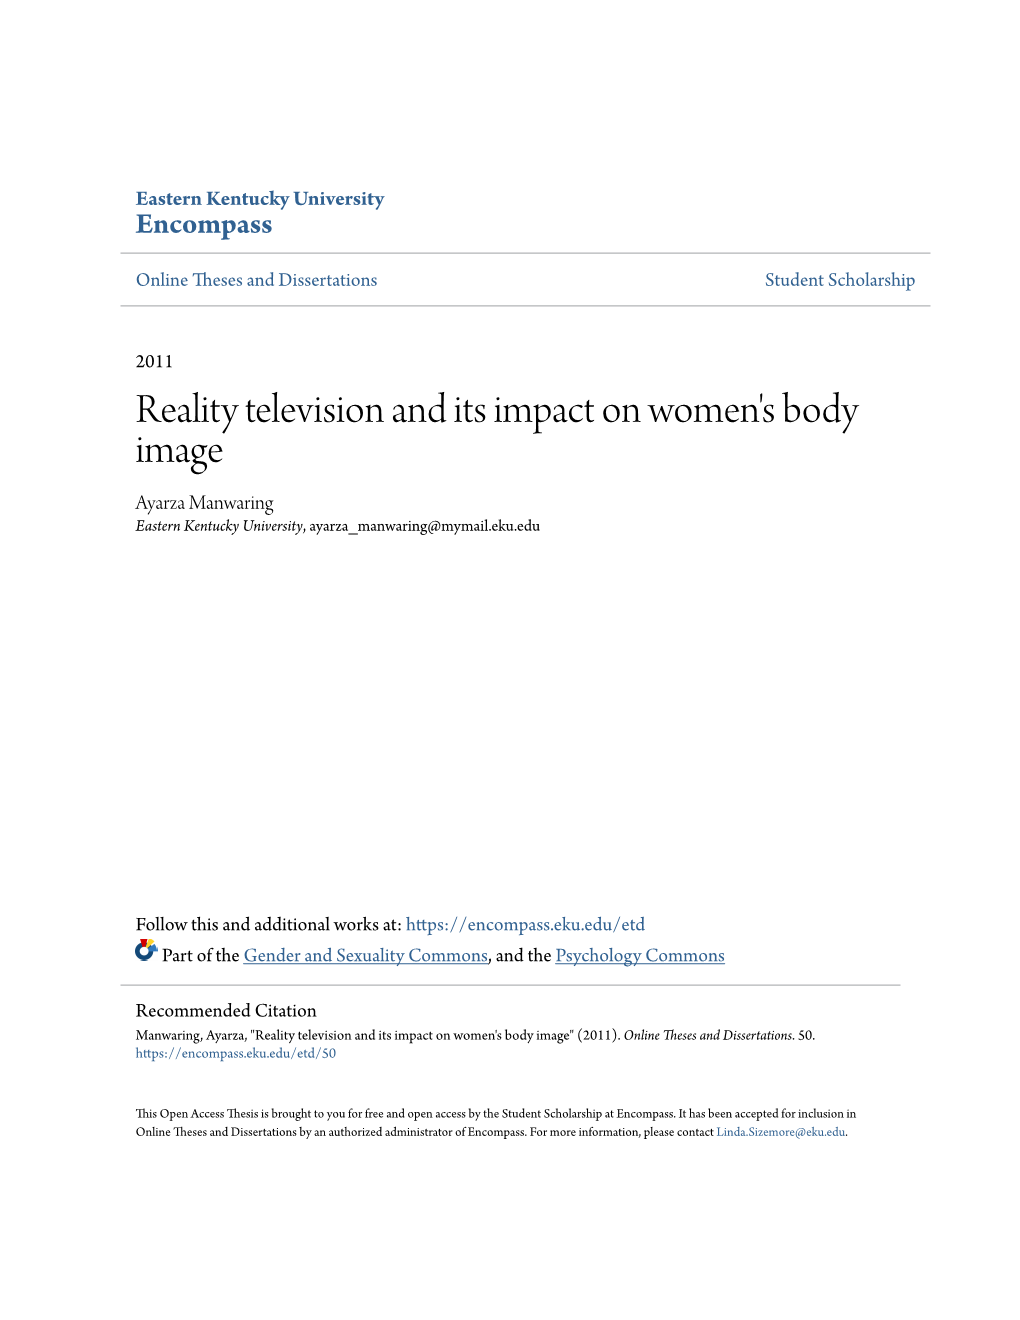 Reality Television and Its Impact on Women's Body Image Ayarza Manwaring Eastern Kentucky University, Ayarza Manwaring@Mymail.Eku.Edu